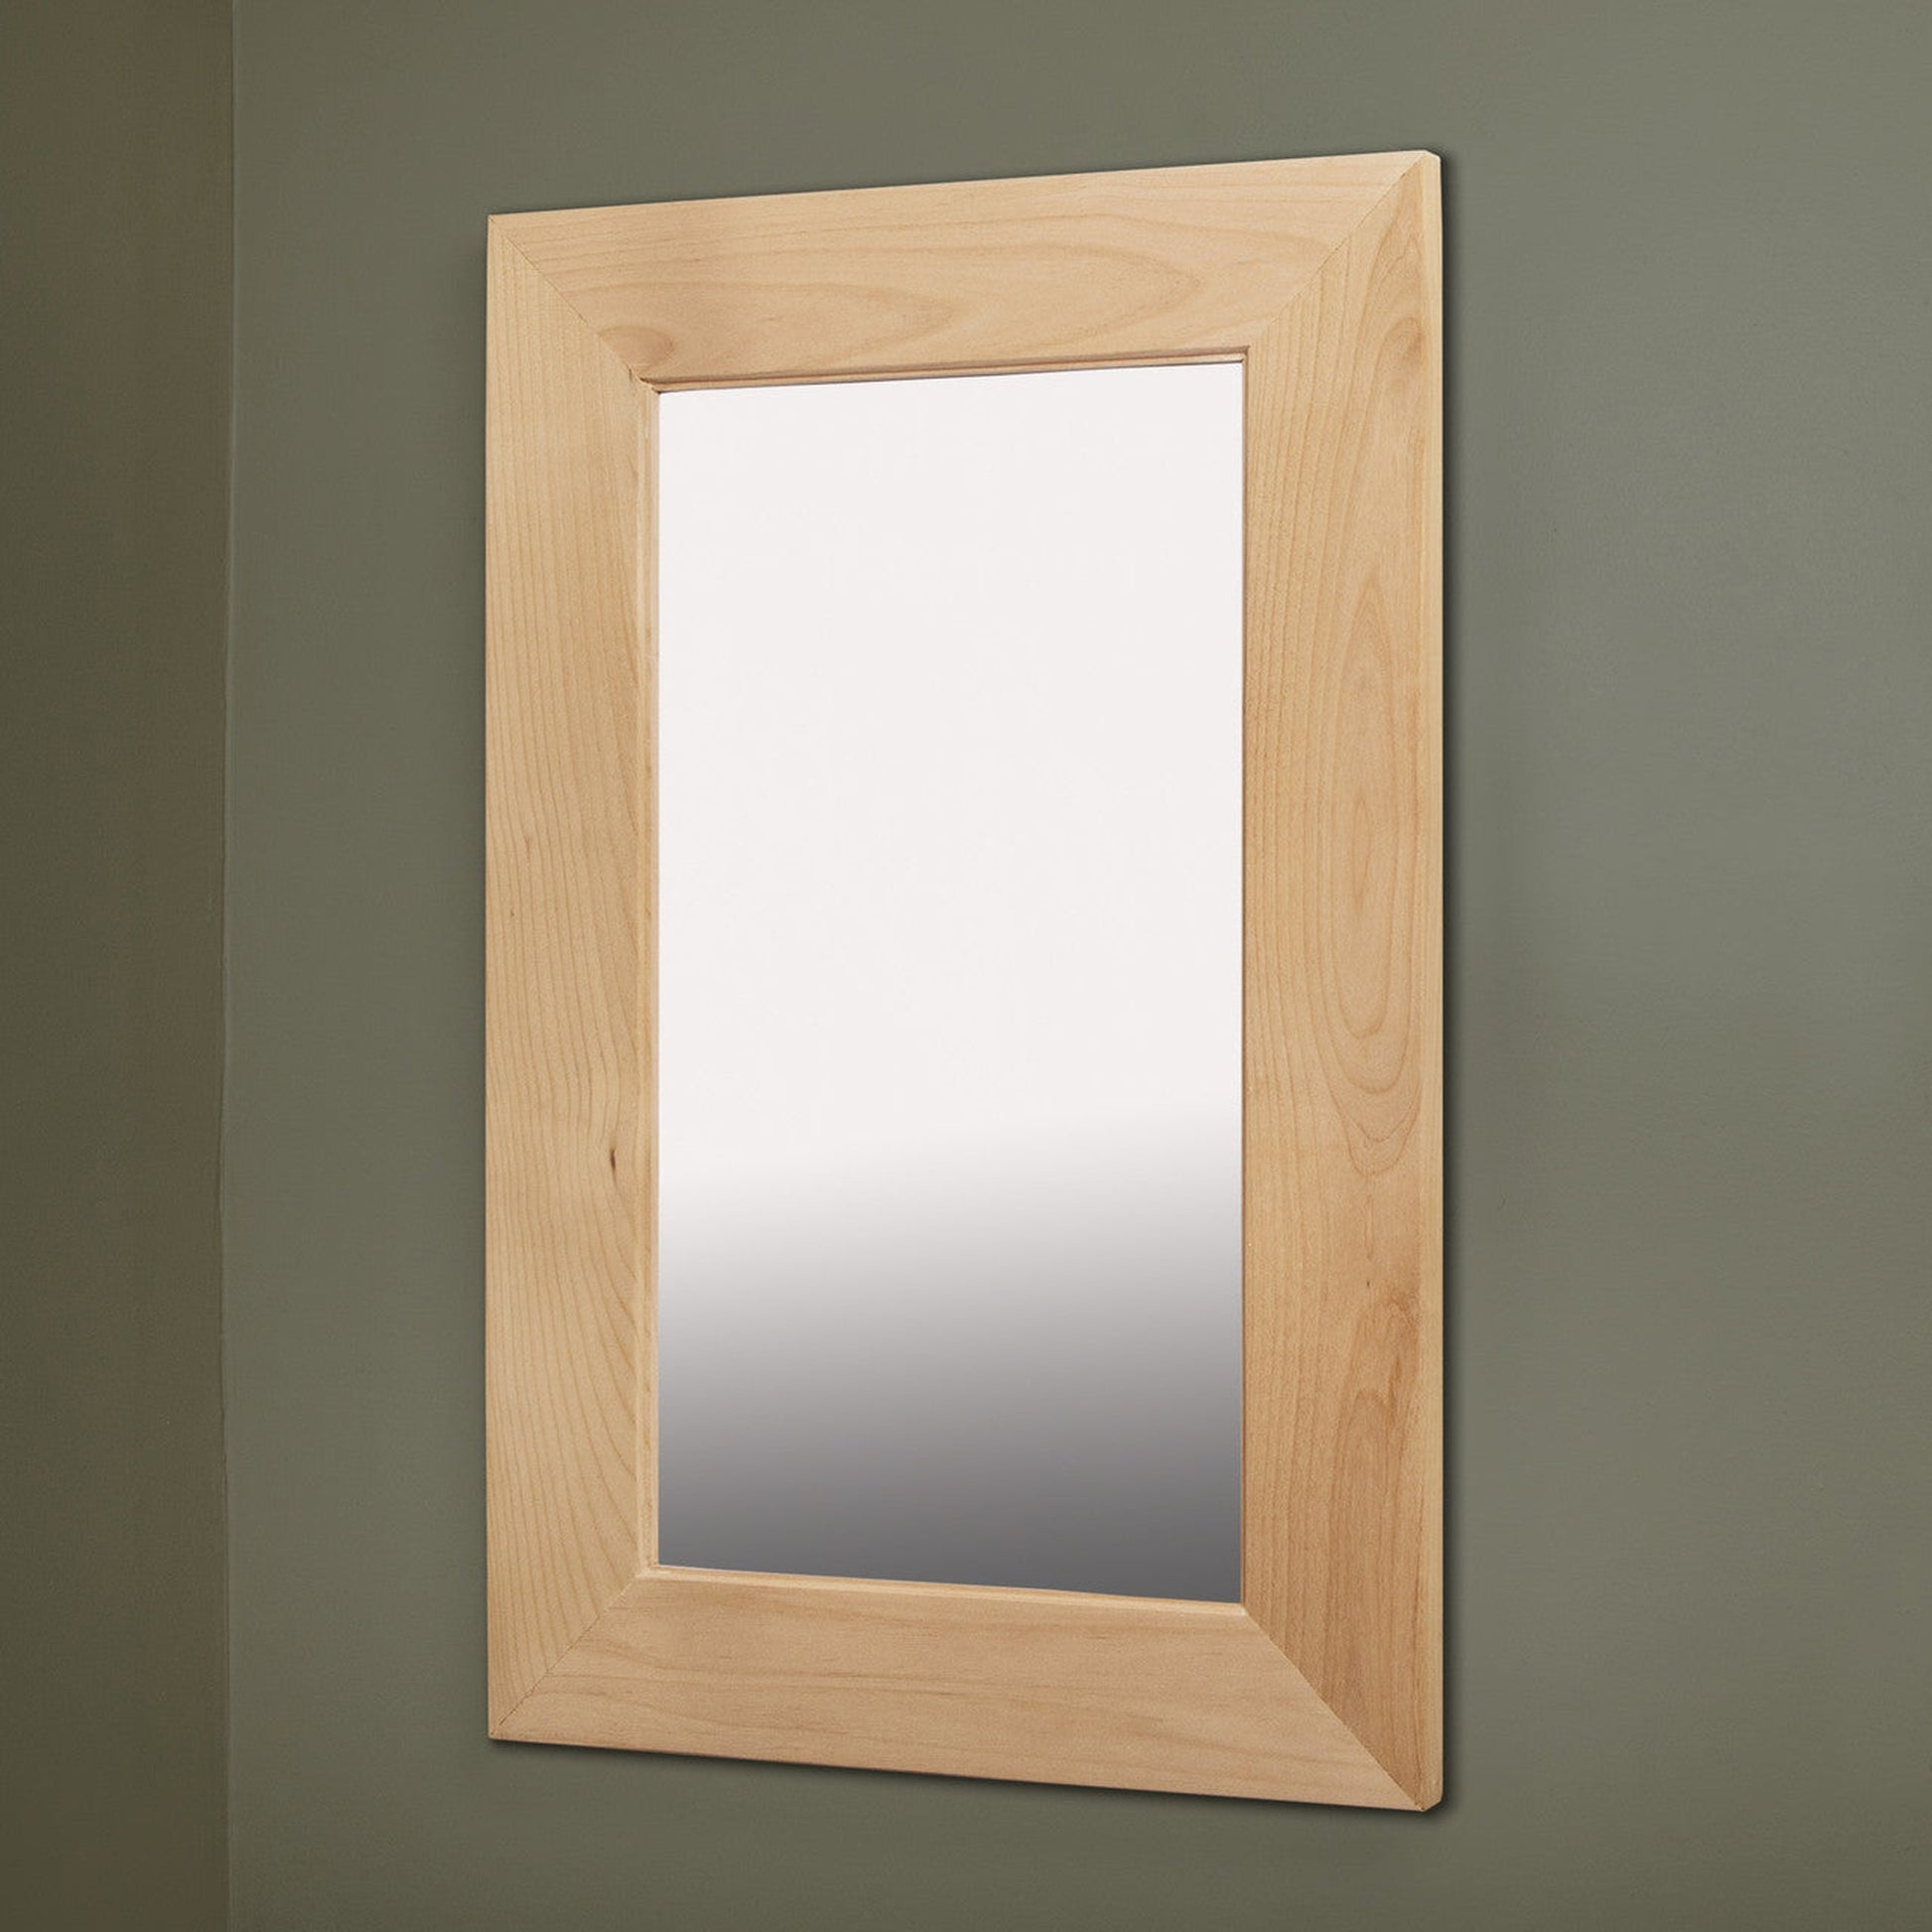 Fox Hollow Furnishings 14" x 24" Unfinished Flat Edge Standard 4" Depth White Interior Mirrored Medicine Cabinet